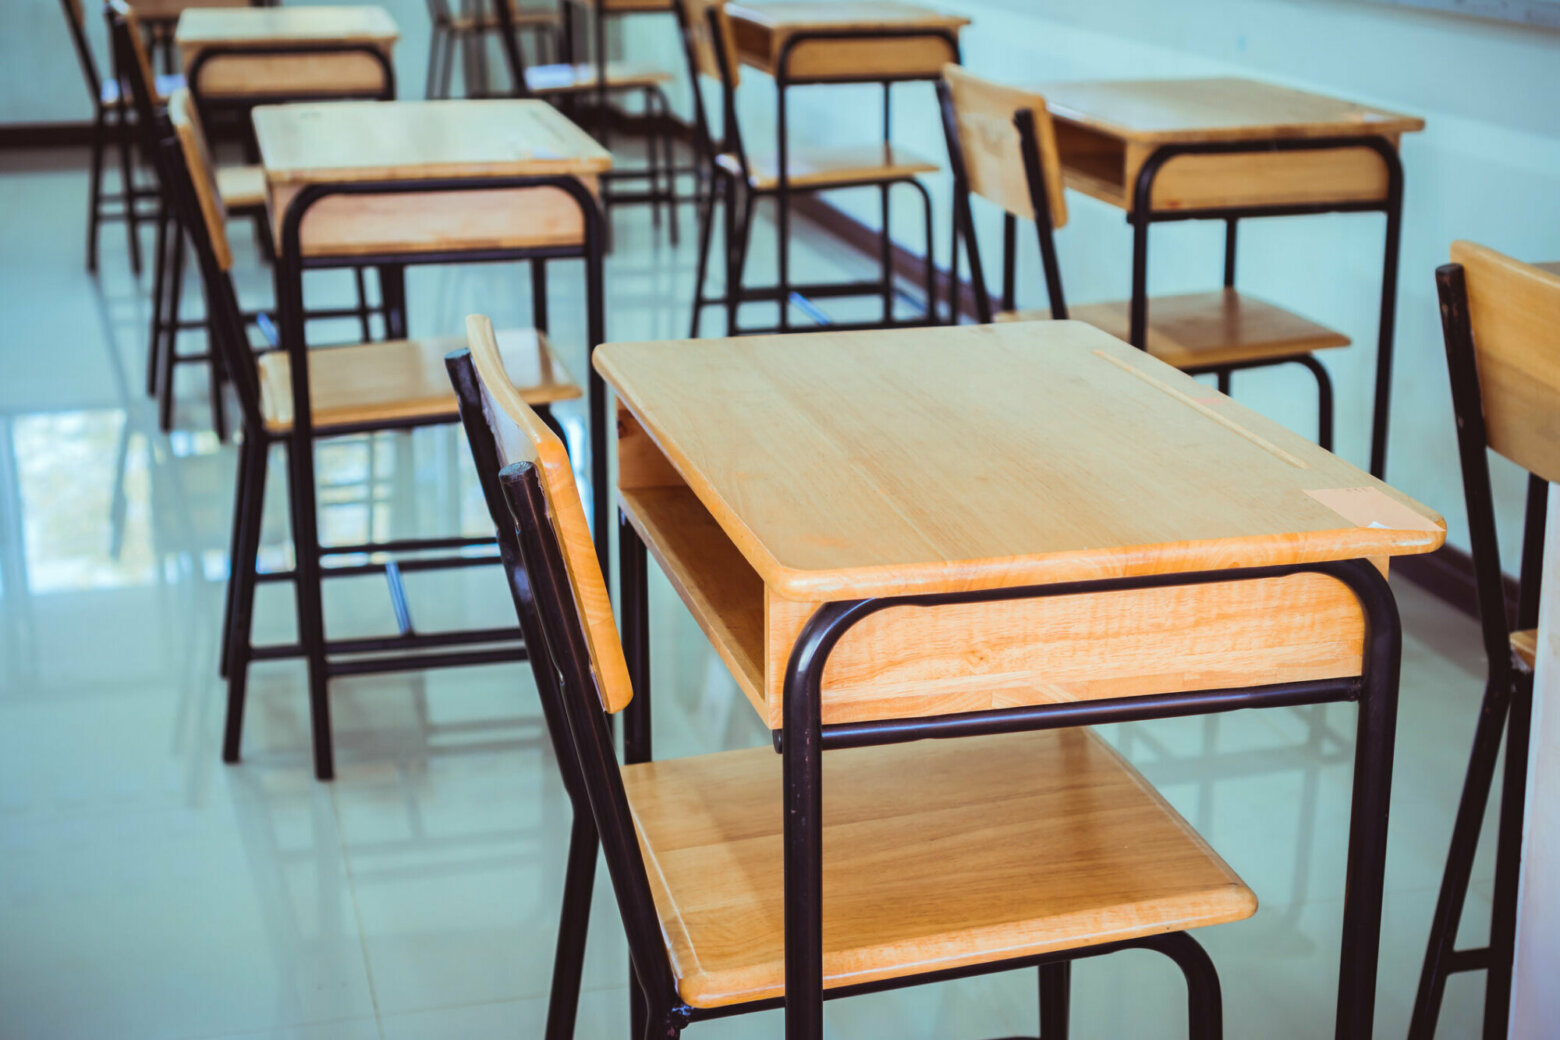 ‘Very sobering’ — DC standardized test scores reveal widening gaps